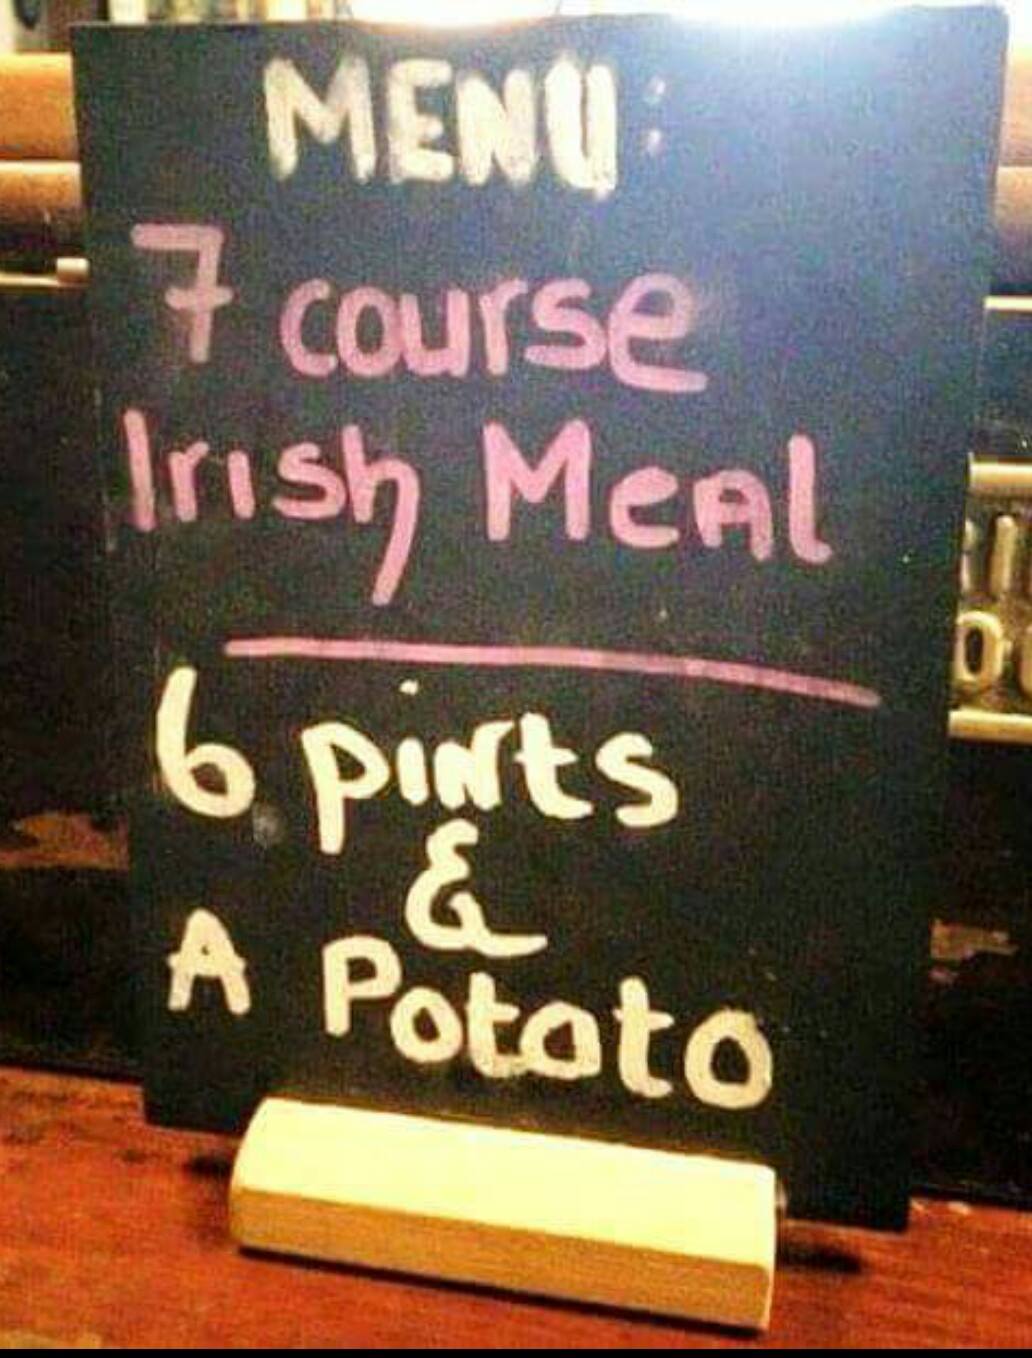 irish seven course dinner - Menu 7 course Irish Meal 6 pirts A Pototo